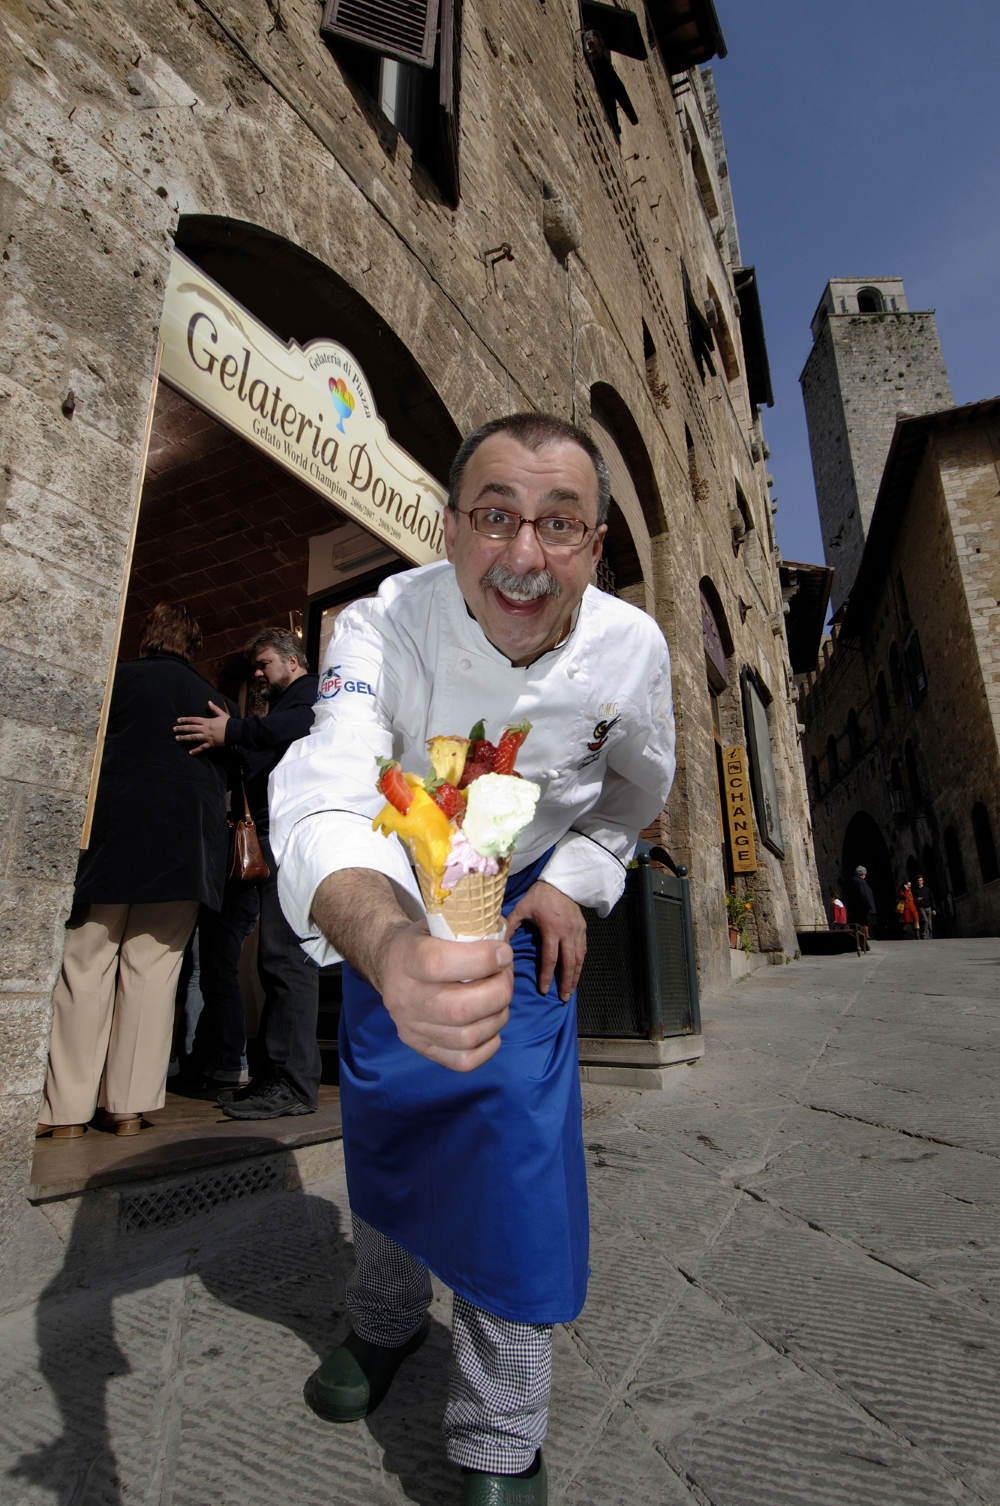 Sergio Dondoli offering his famous icecream